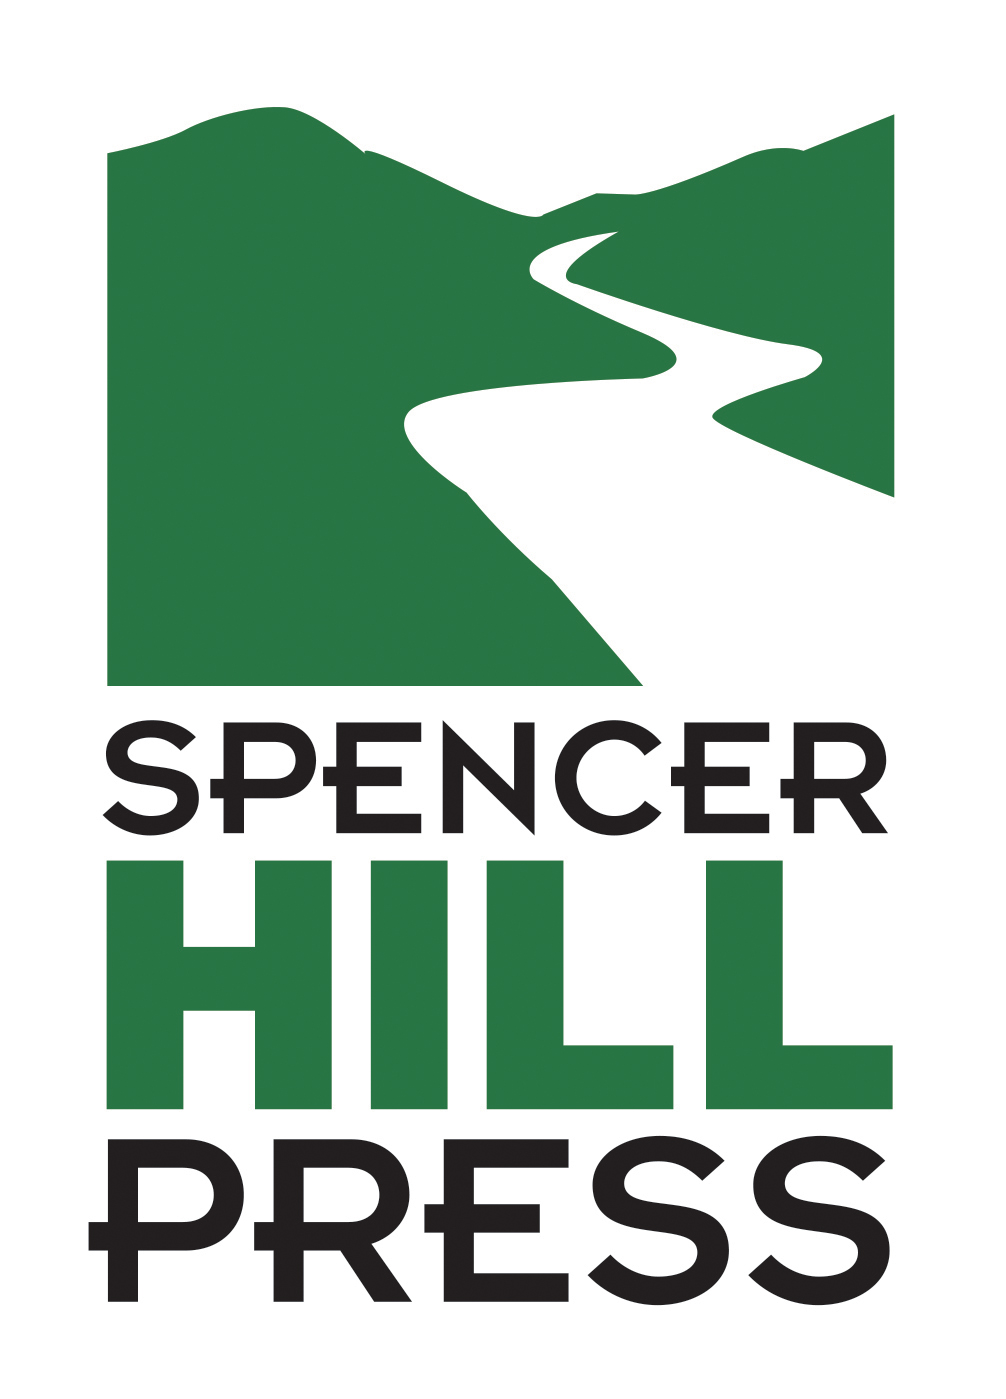 Spencer Hill Press